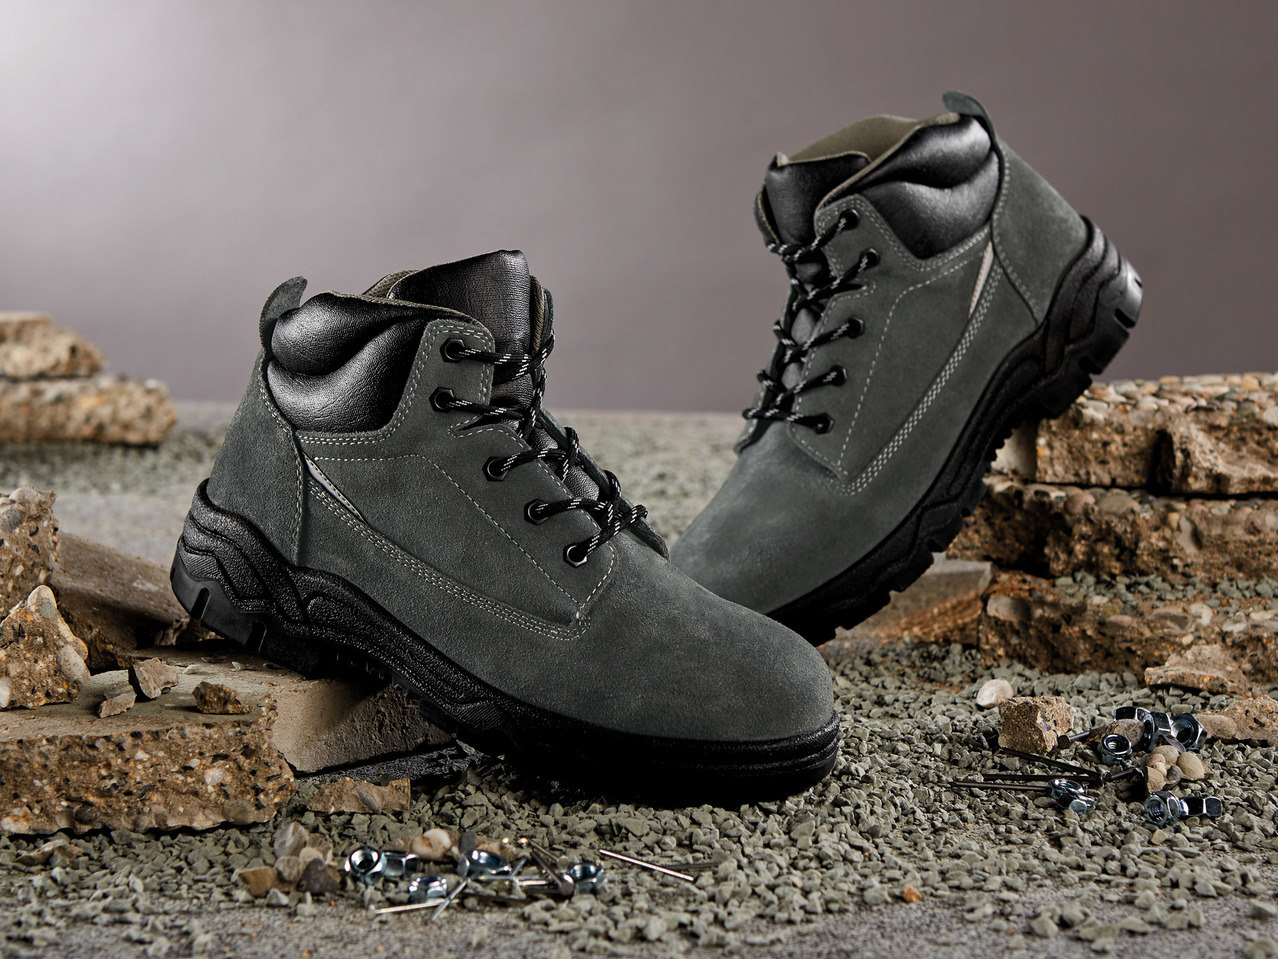 Powerfix Profi Men's Leather Safety Boots1